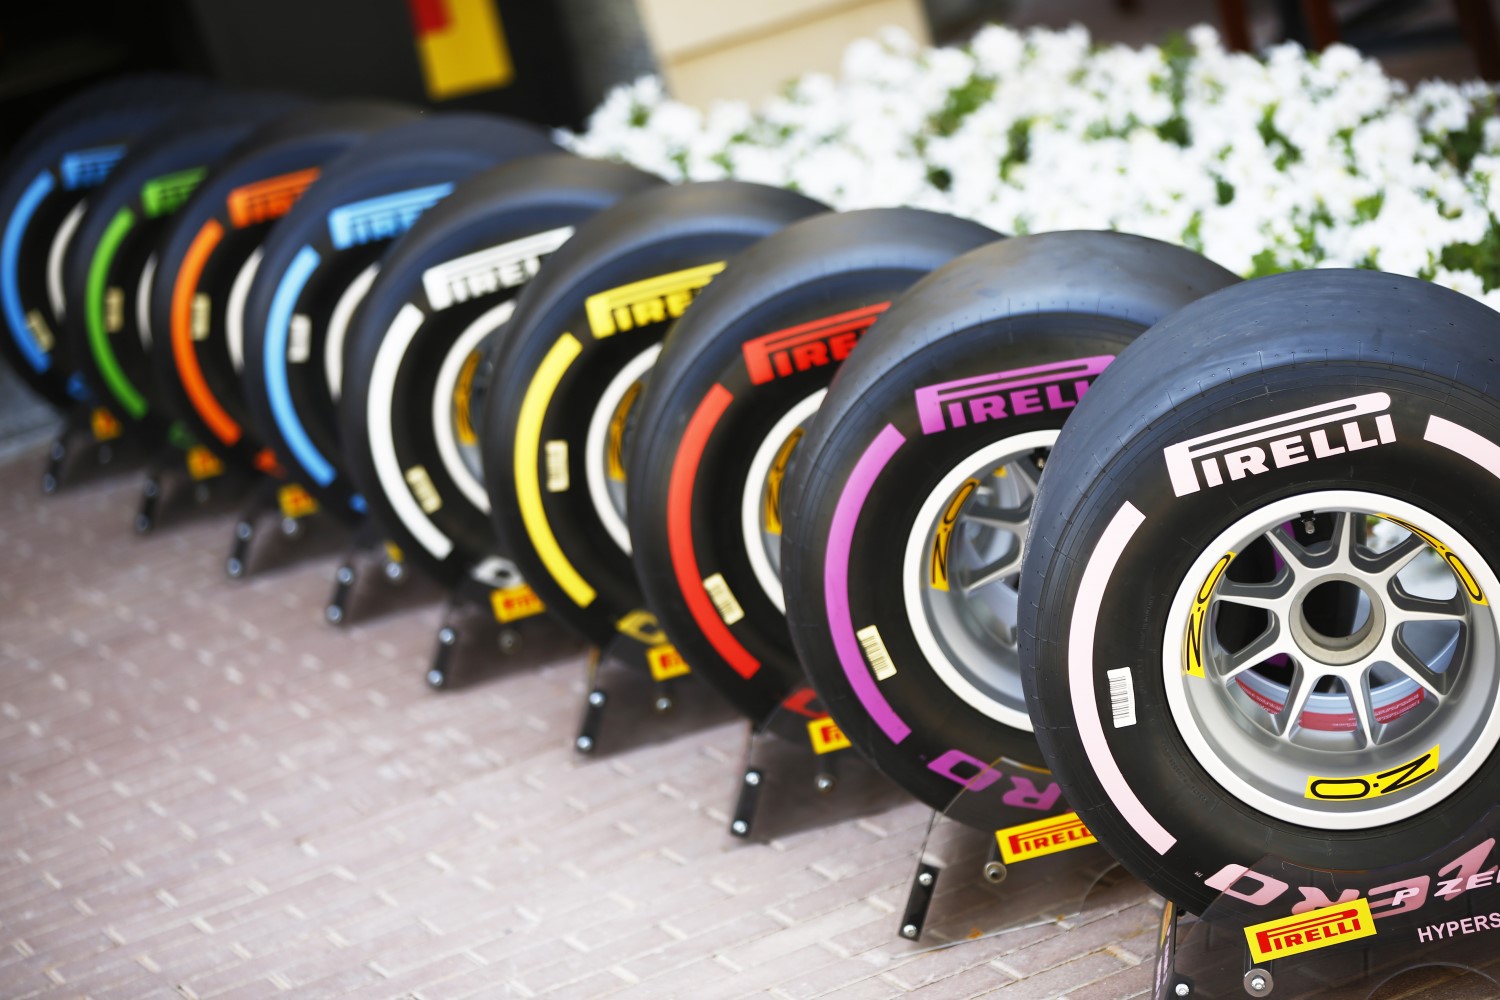 2018 F1 tires